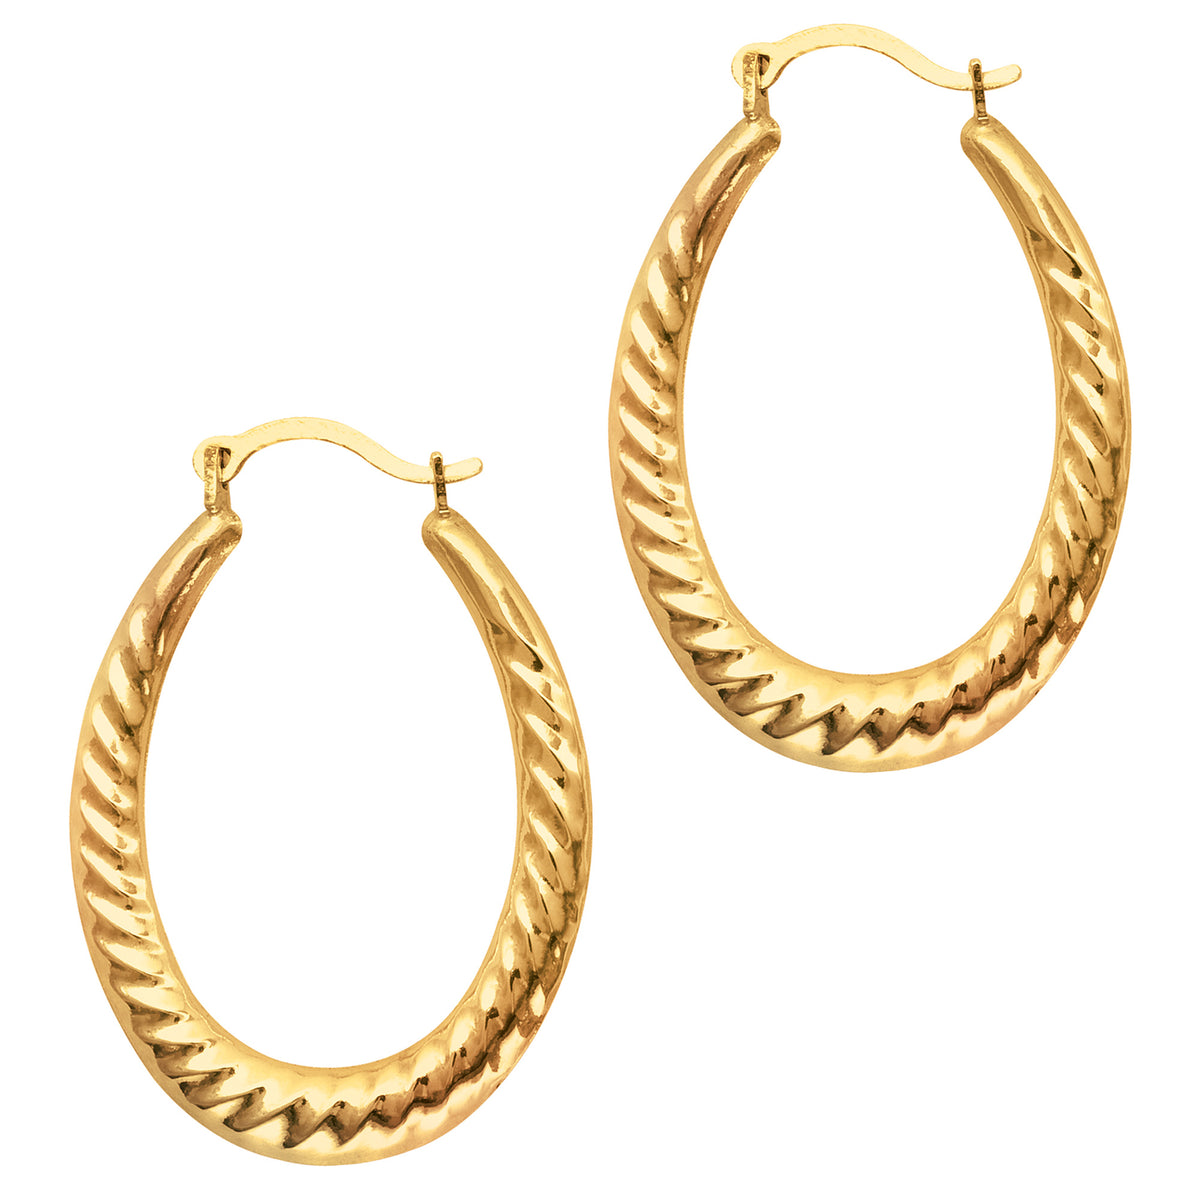 10k Yellow Gold Ridged Oval Shaped Hoop Earrings, Diameter 30mm fine designer jewelry for men and women